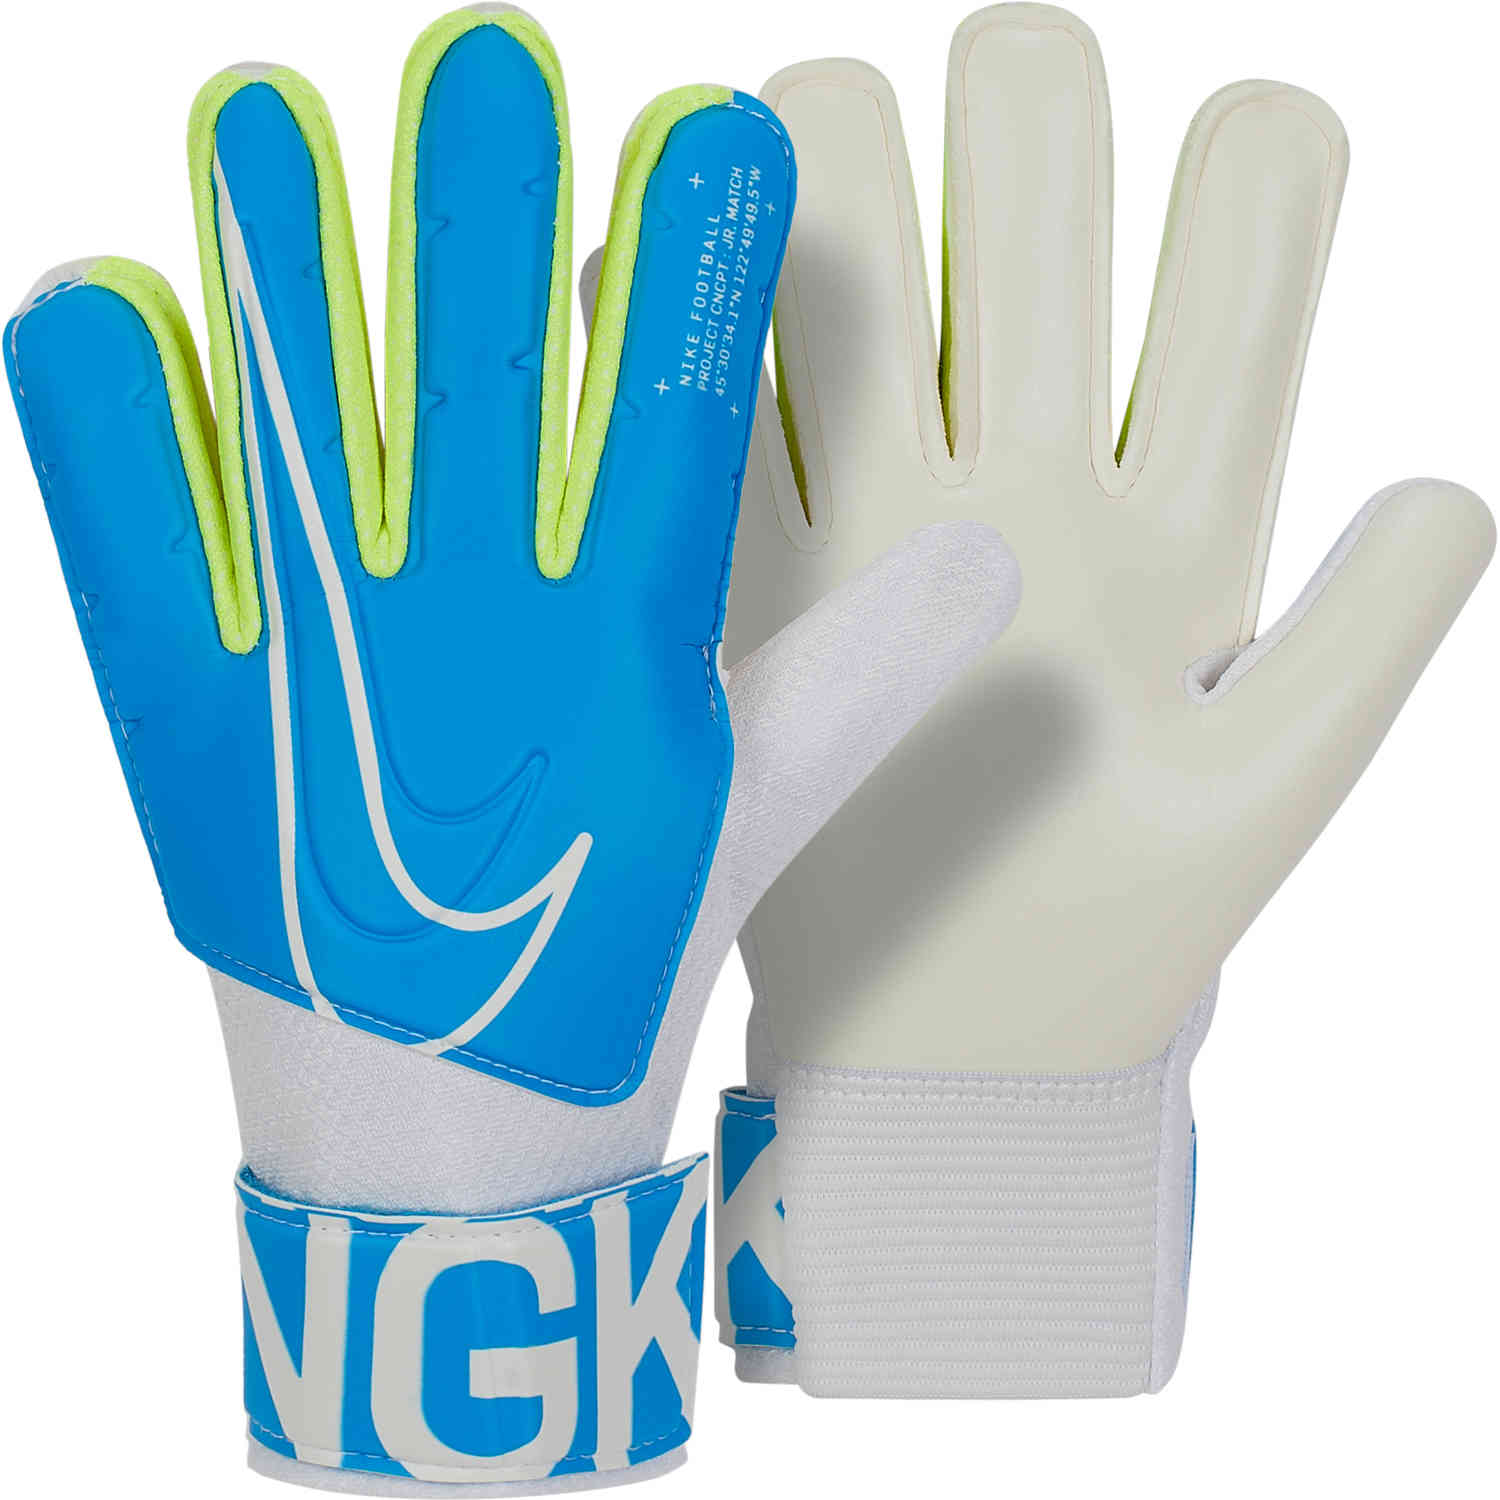 Kids Nike Match Goalkeeper Gloves - New 